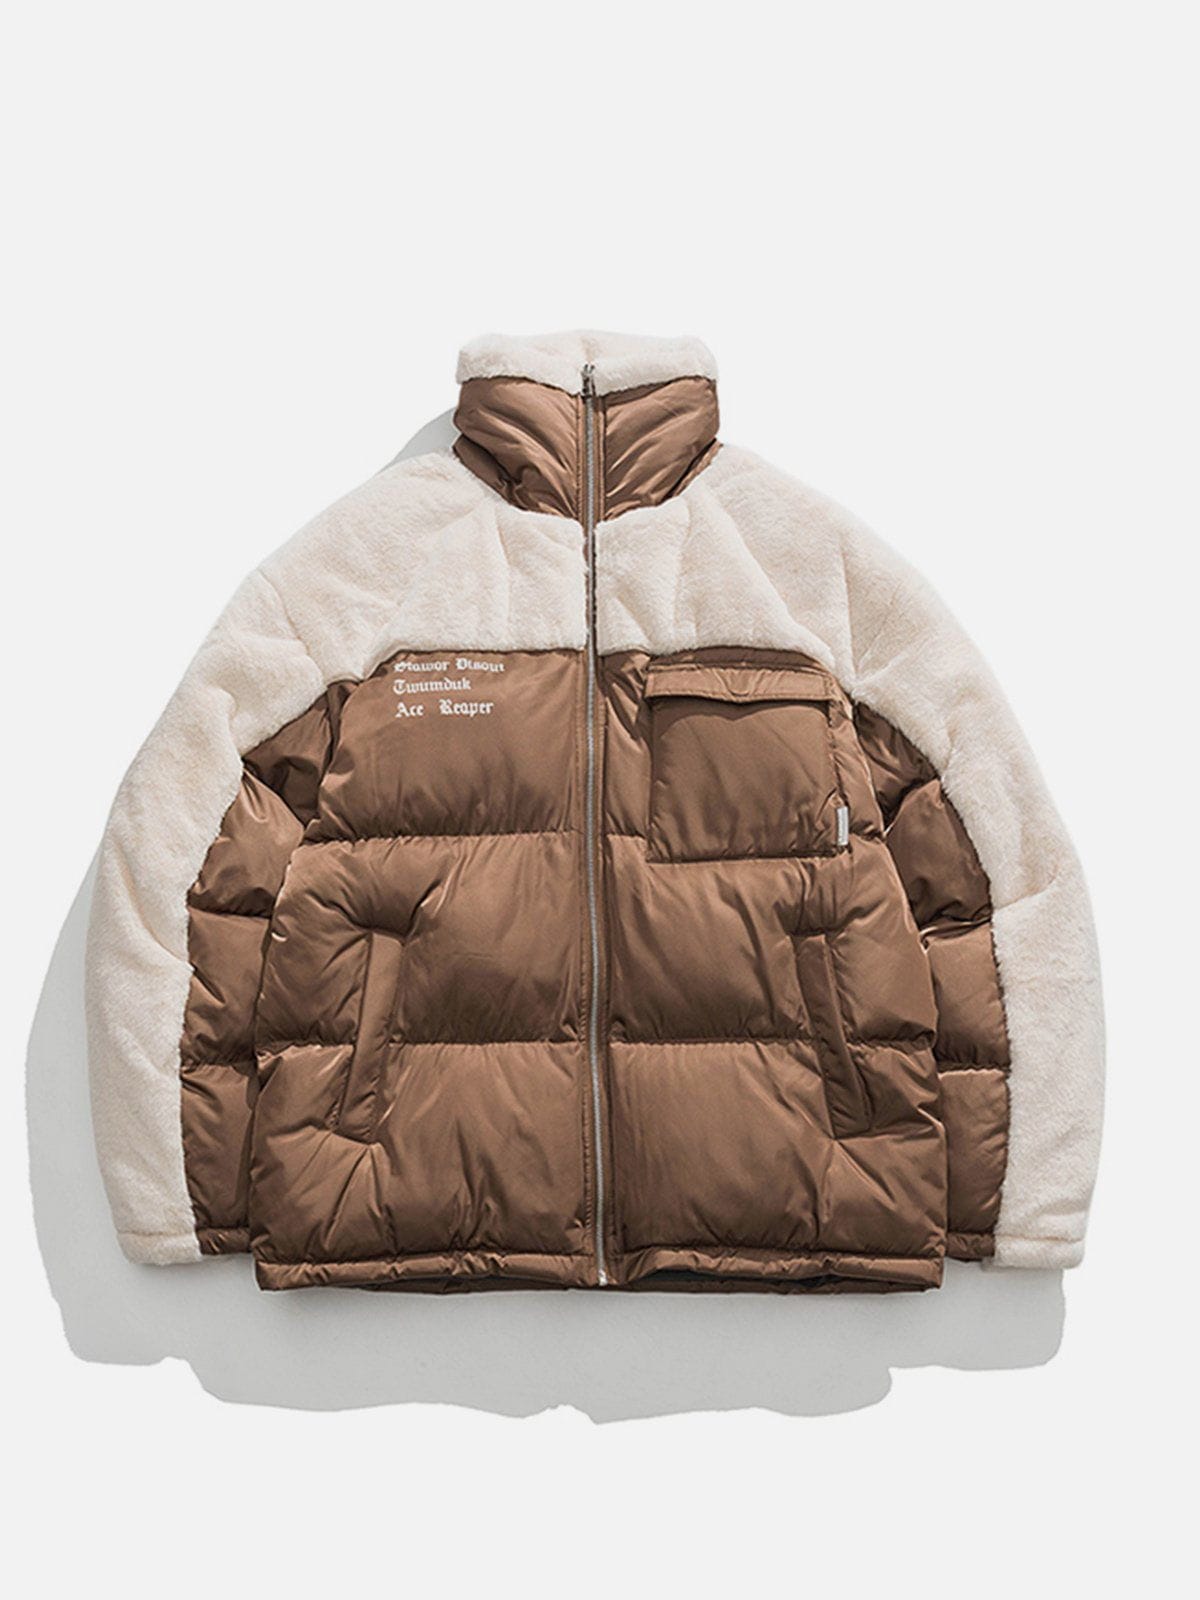 Patchwork Pockets Sherpa Winter Coat